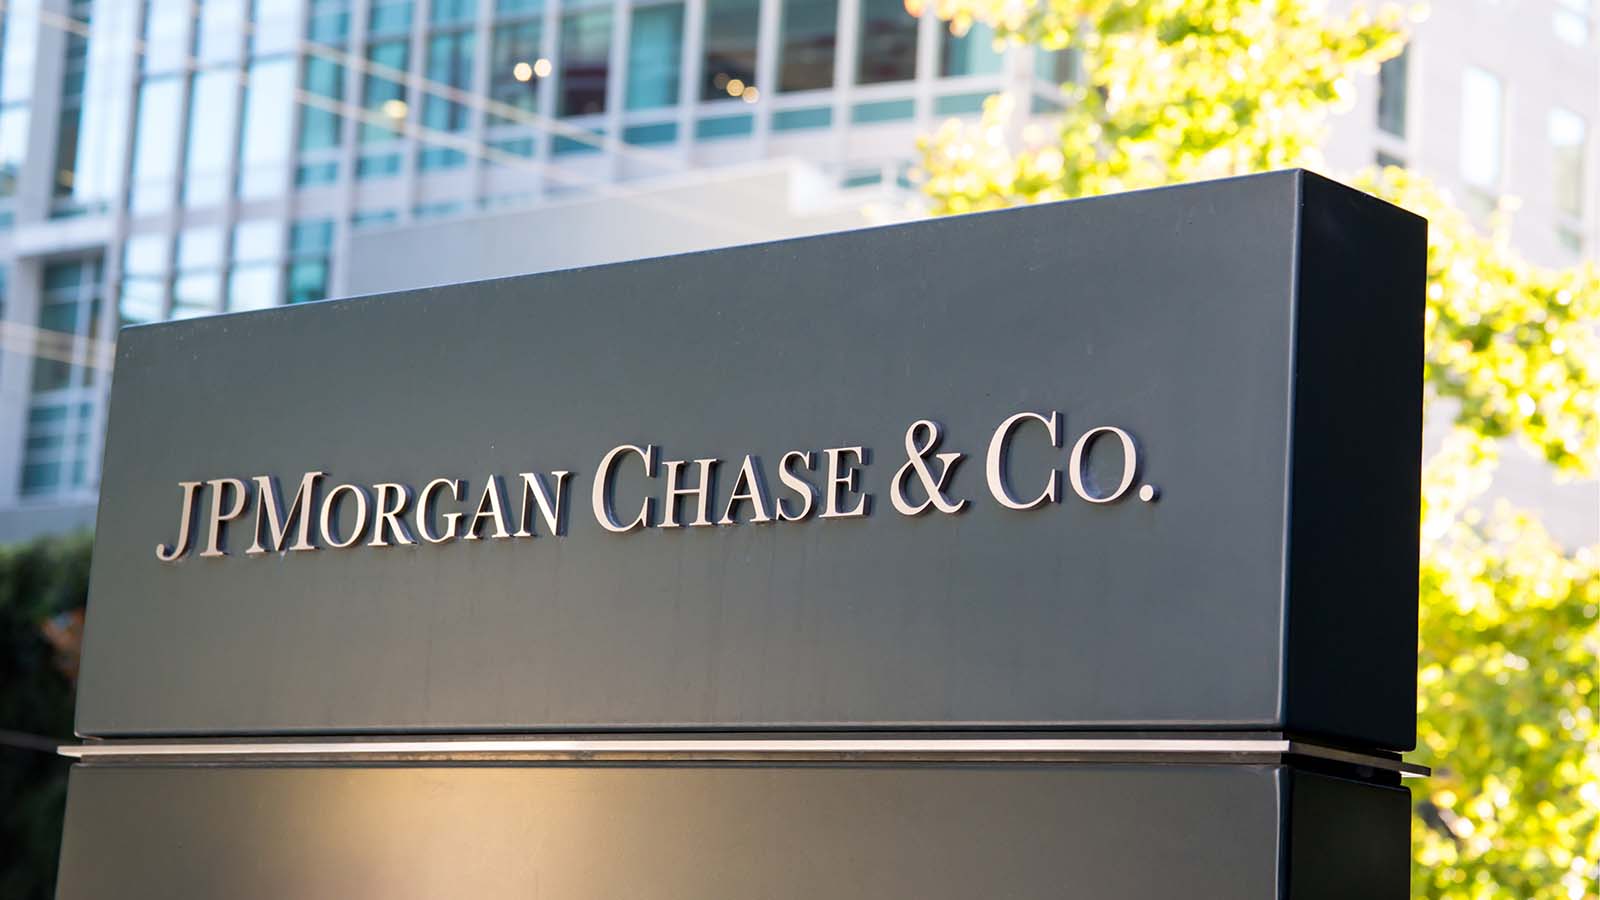 JPM Stock: JPMorgan Chase Risks Being Left Behind in a Fintech World